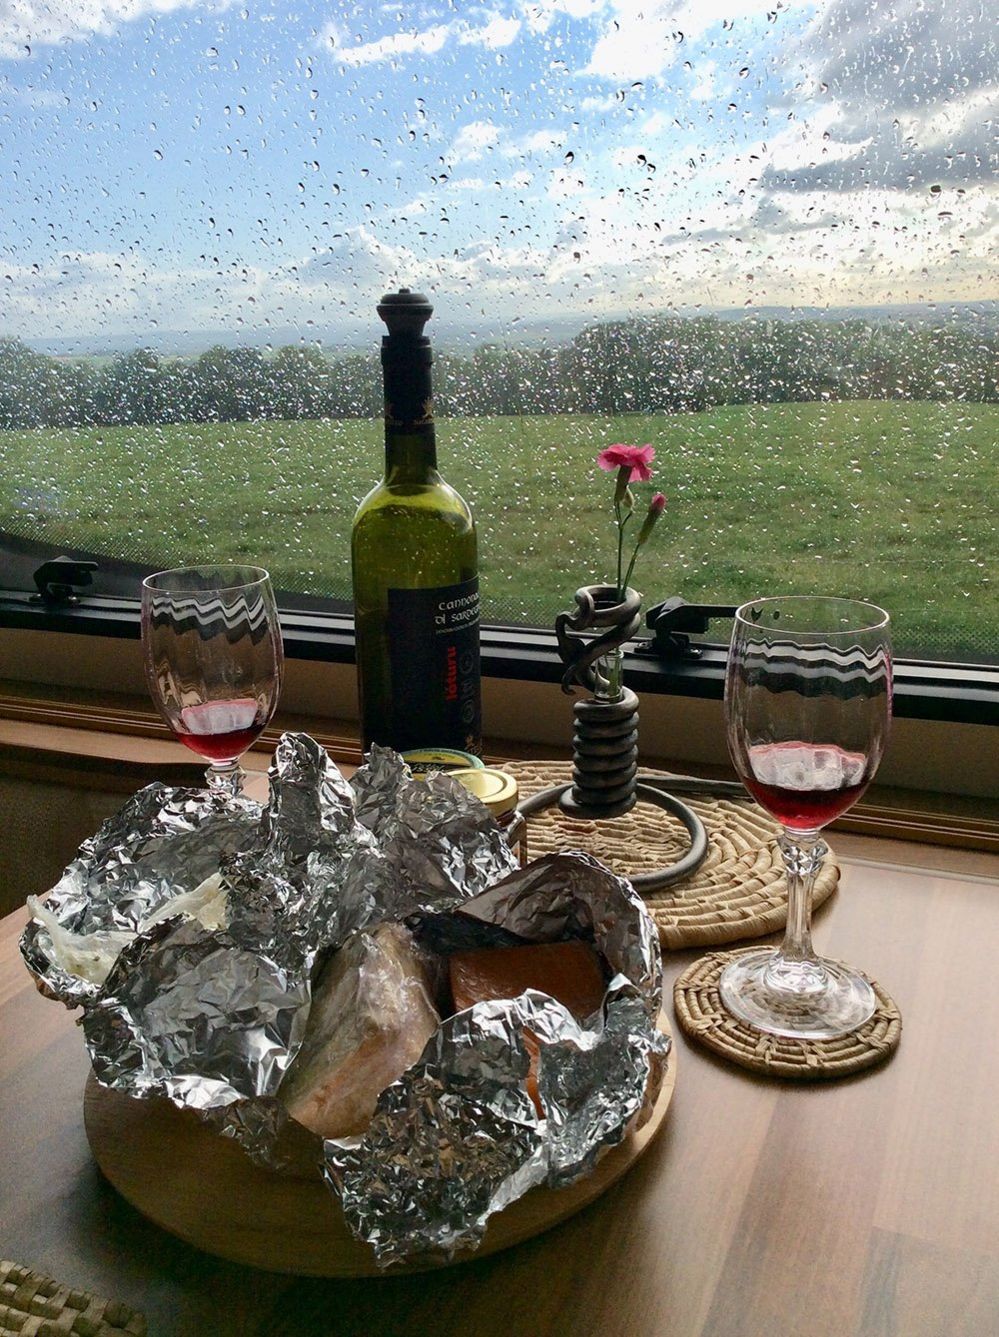 Wine in the window of a caravan